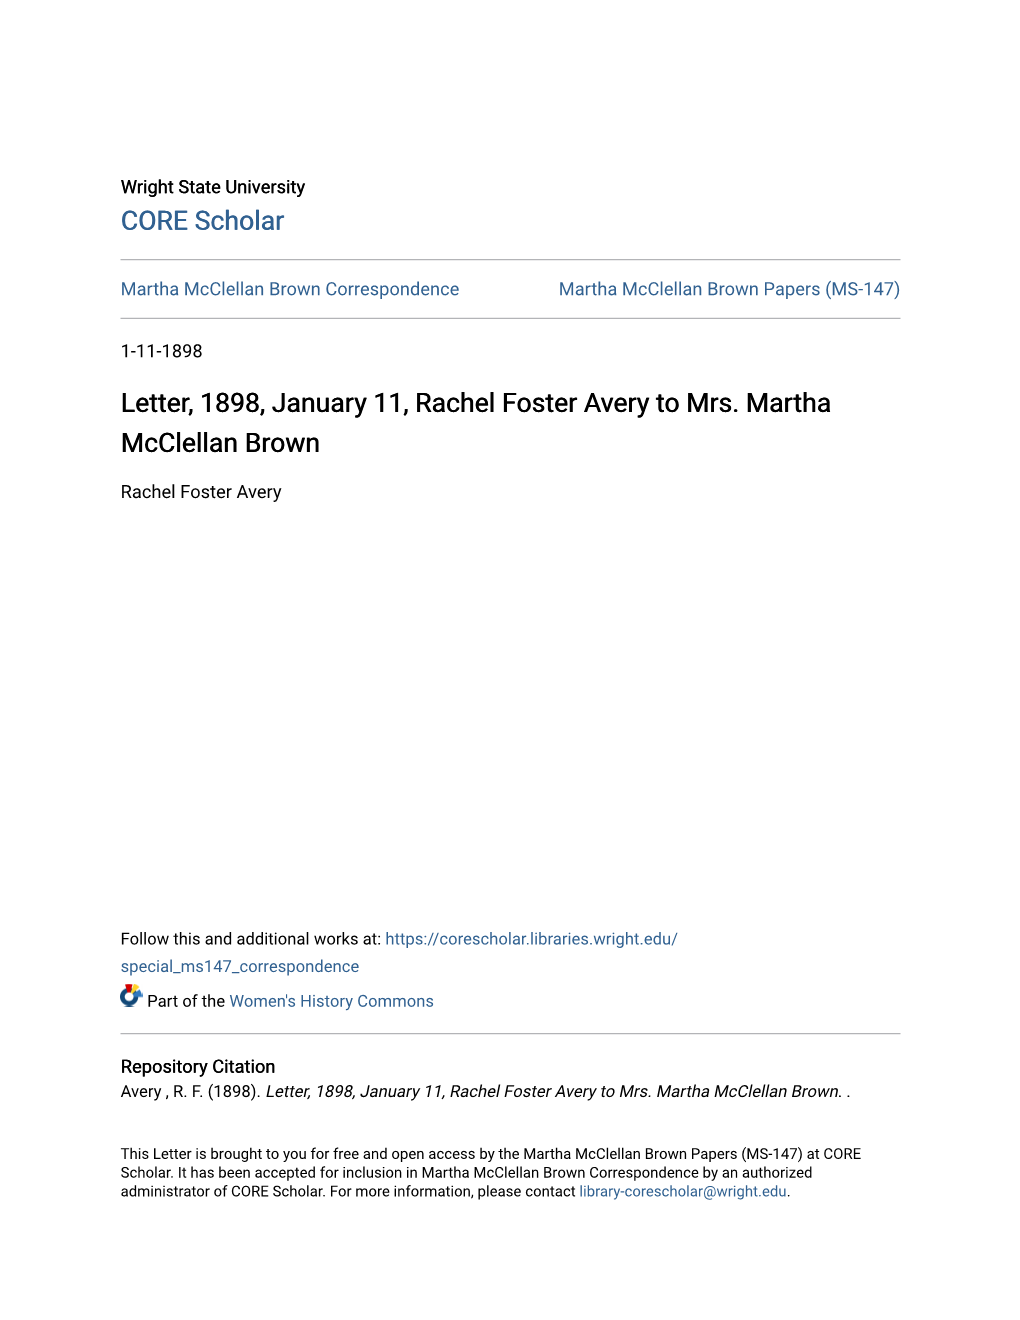 Letter, 1898, January 11, Rachel Foster Avery to Mrs. Martha Mcclellan Brown